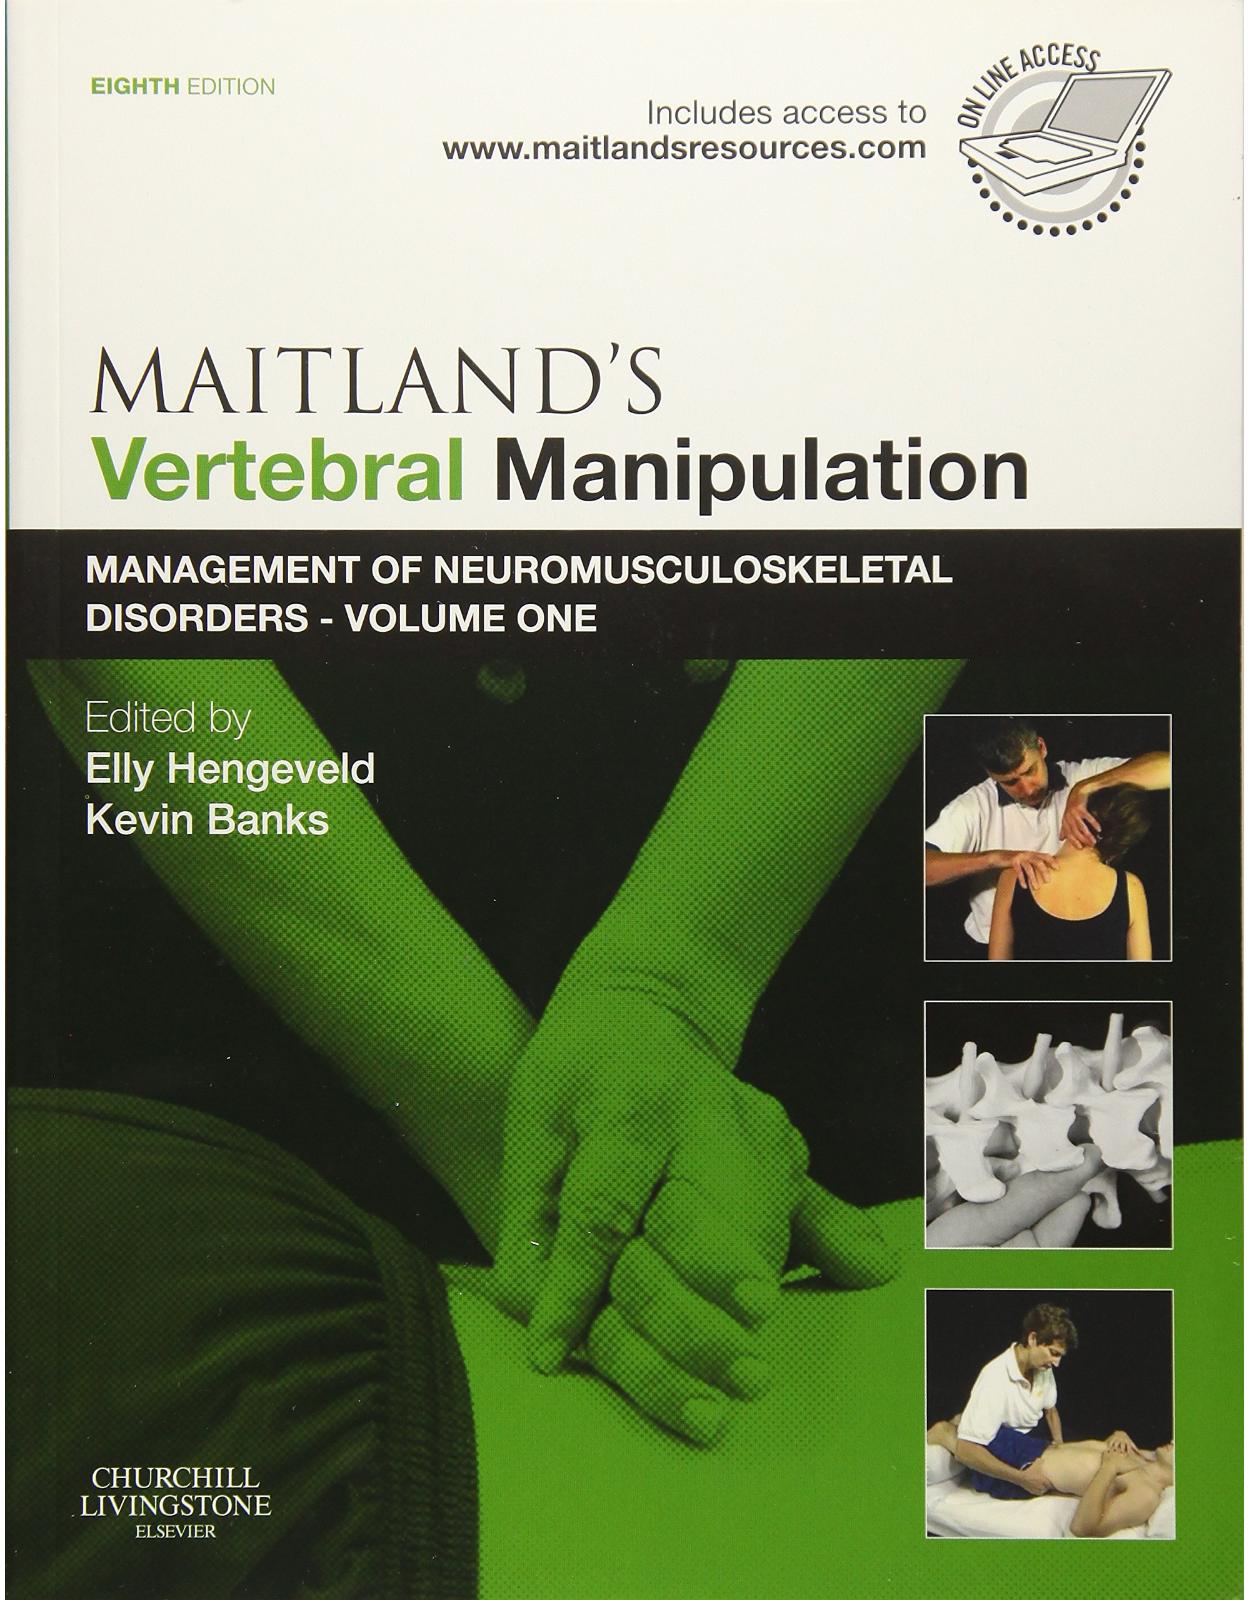 Maitland's Vertebral Manipulation: Management of Neuromusculoskeletal Disorders - Volume 1, 8e